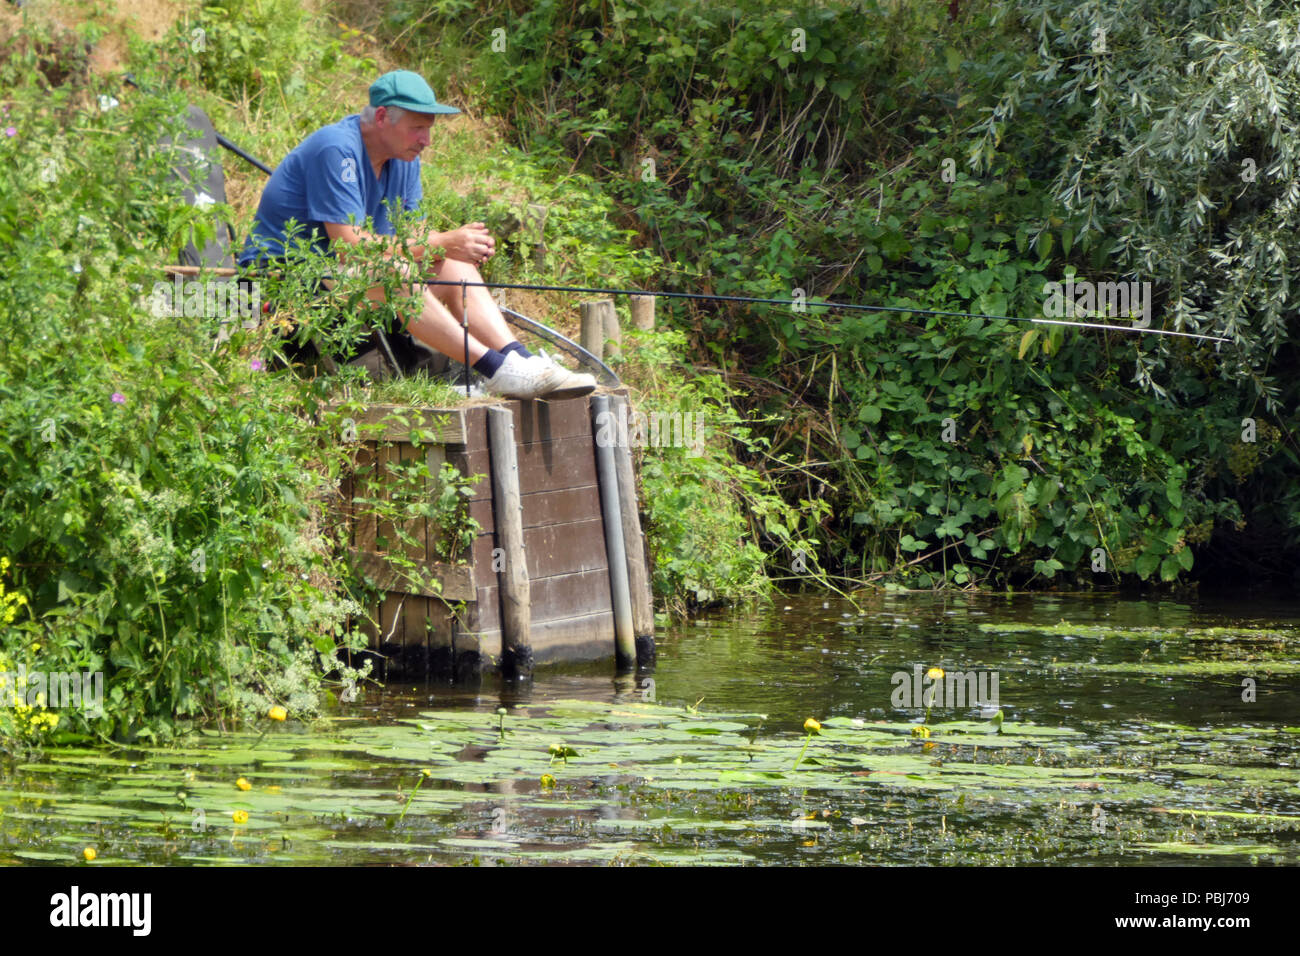 Man sitting by river bank fishing, river Medway, Kent, England